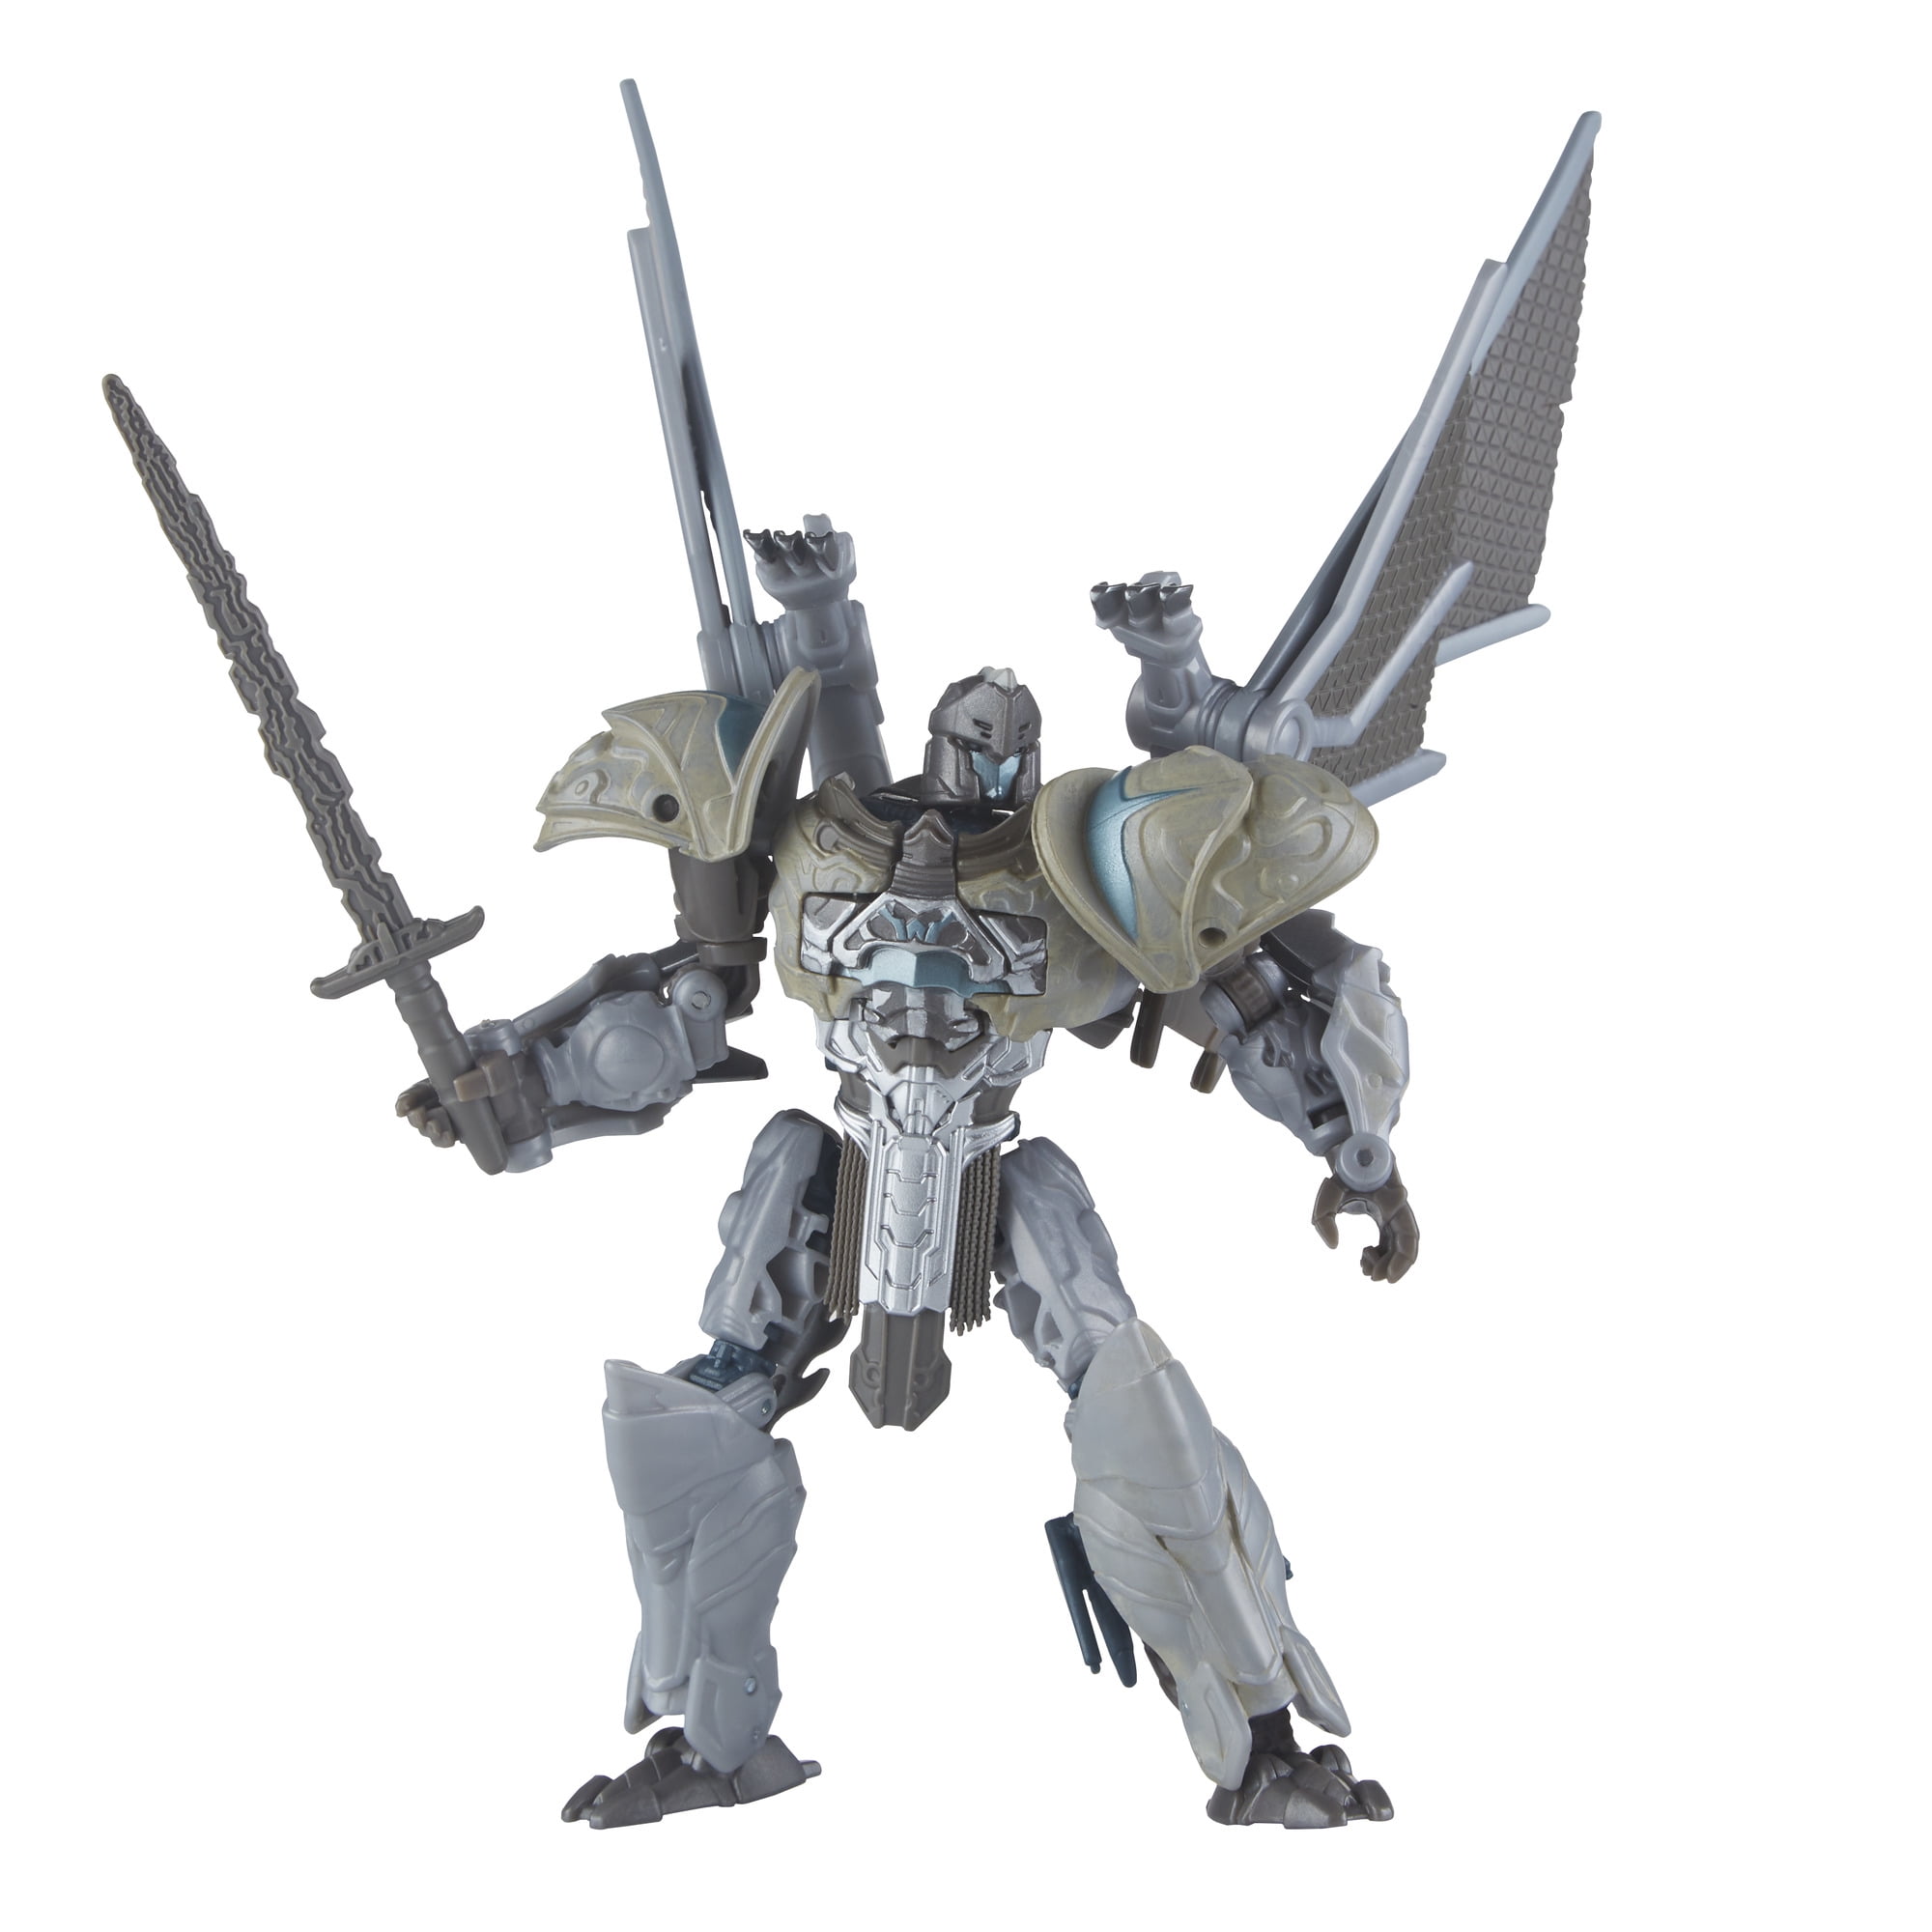 Transformers: The Last Knight Premier Edition Deluxe Steelbane